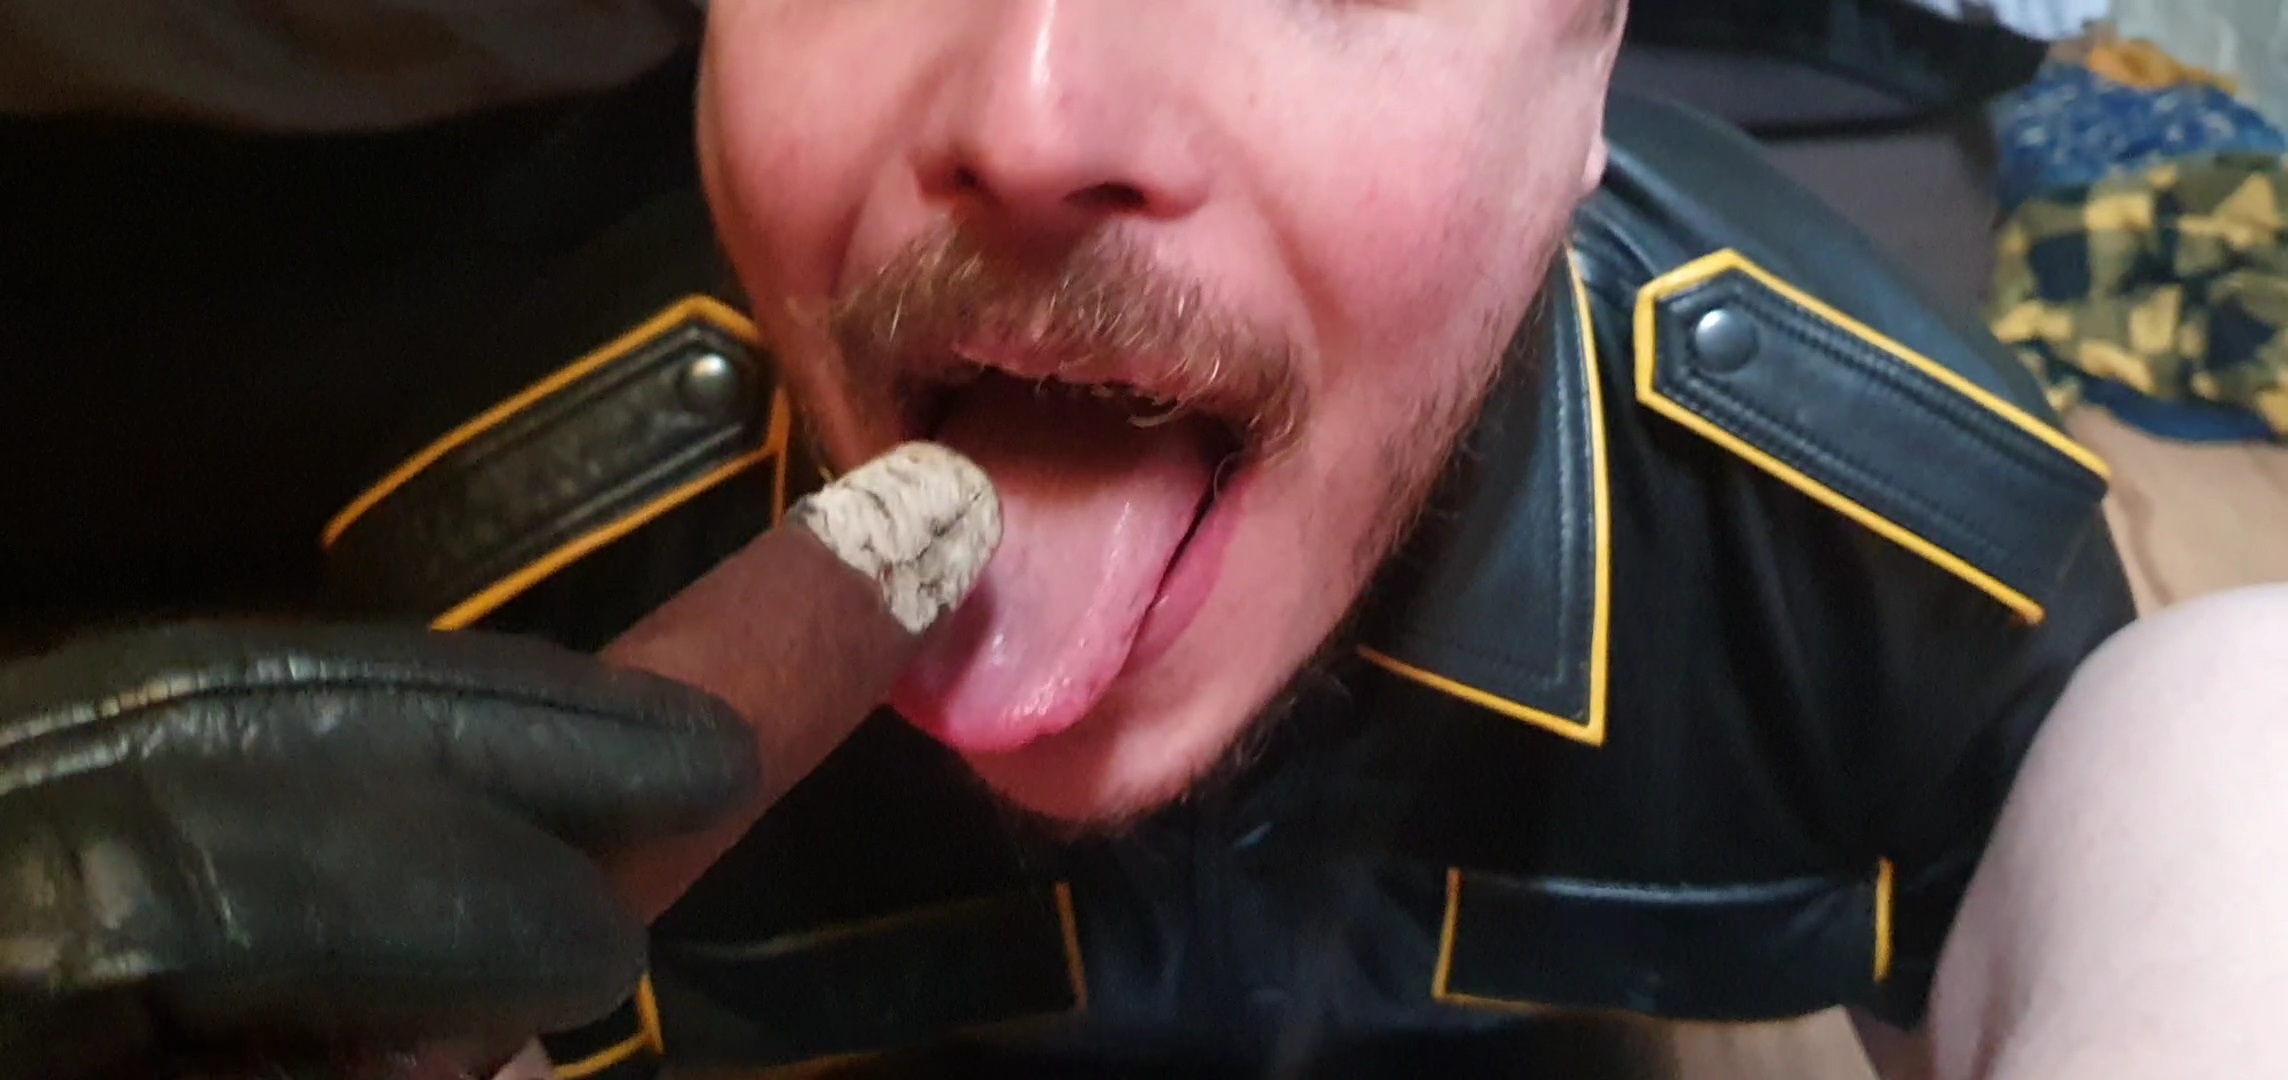 Cigarboi is providing an ashtray blowjob